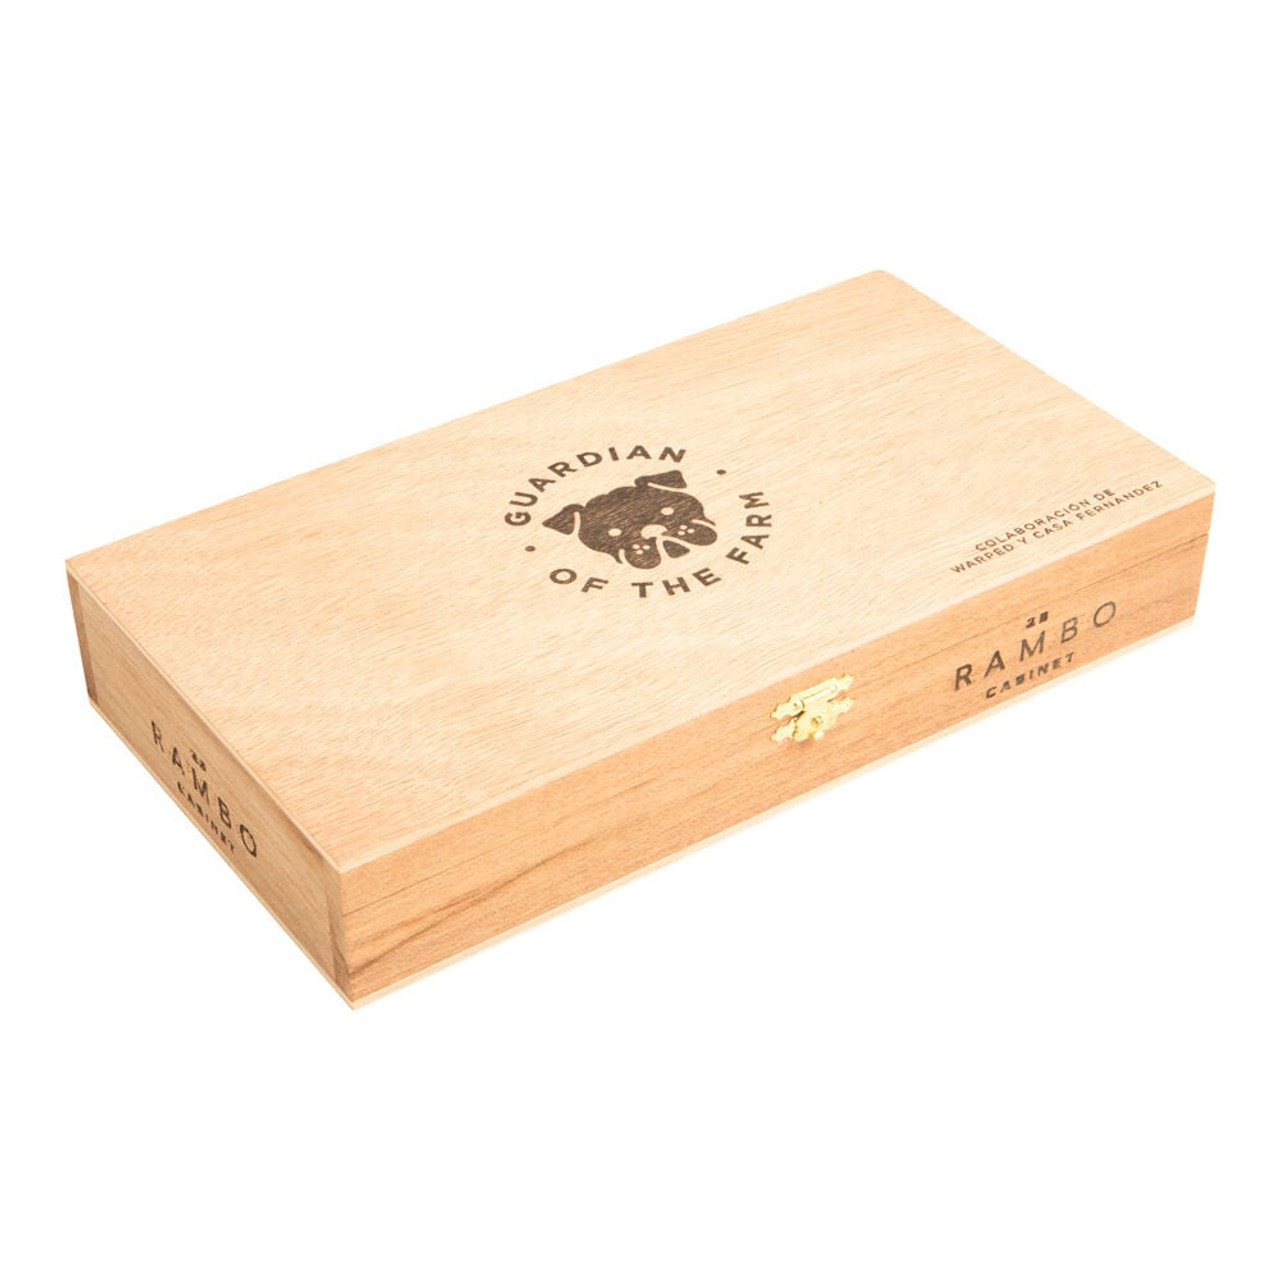 Casa Fernandez Guardian Of The Farm Rambo Cigars - 4.5 x 48 (Box of 25) *Box